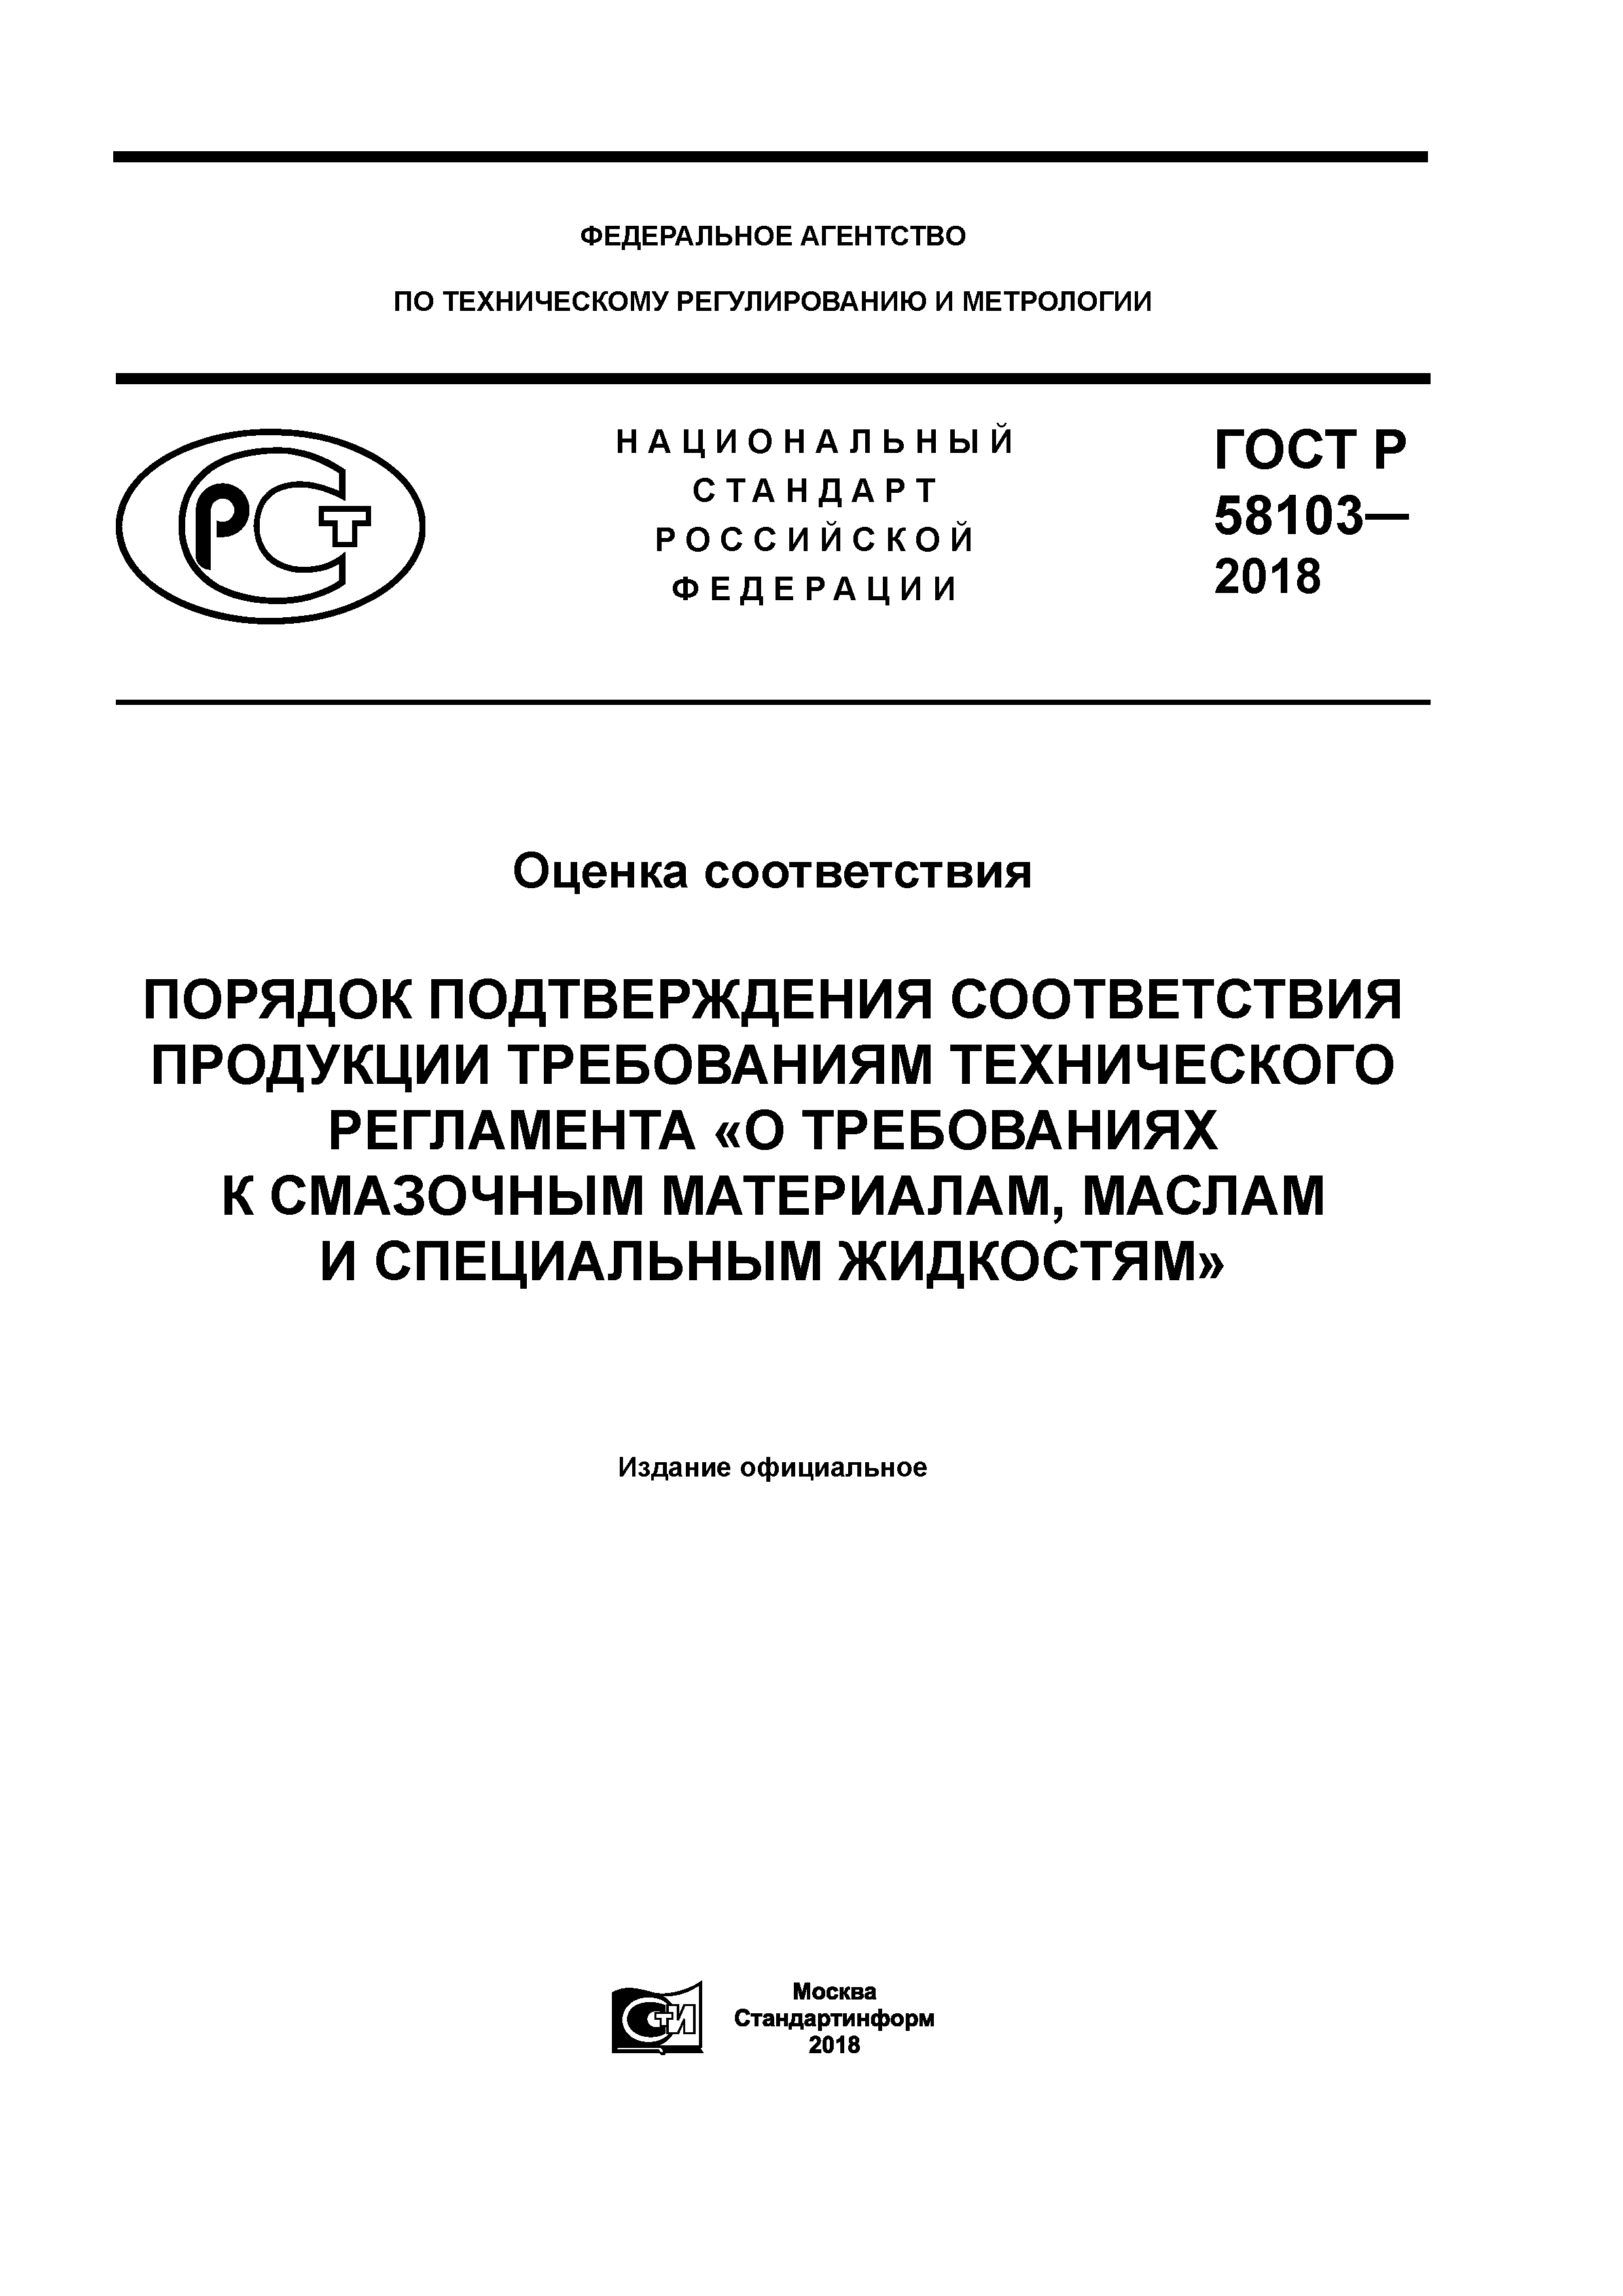 ГОСТ Р 58103-2018